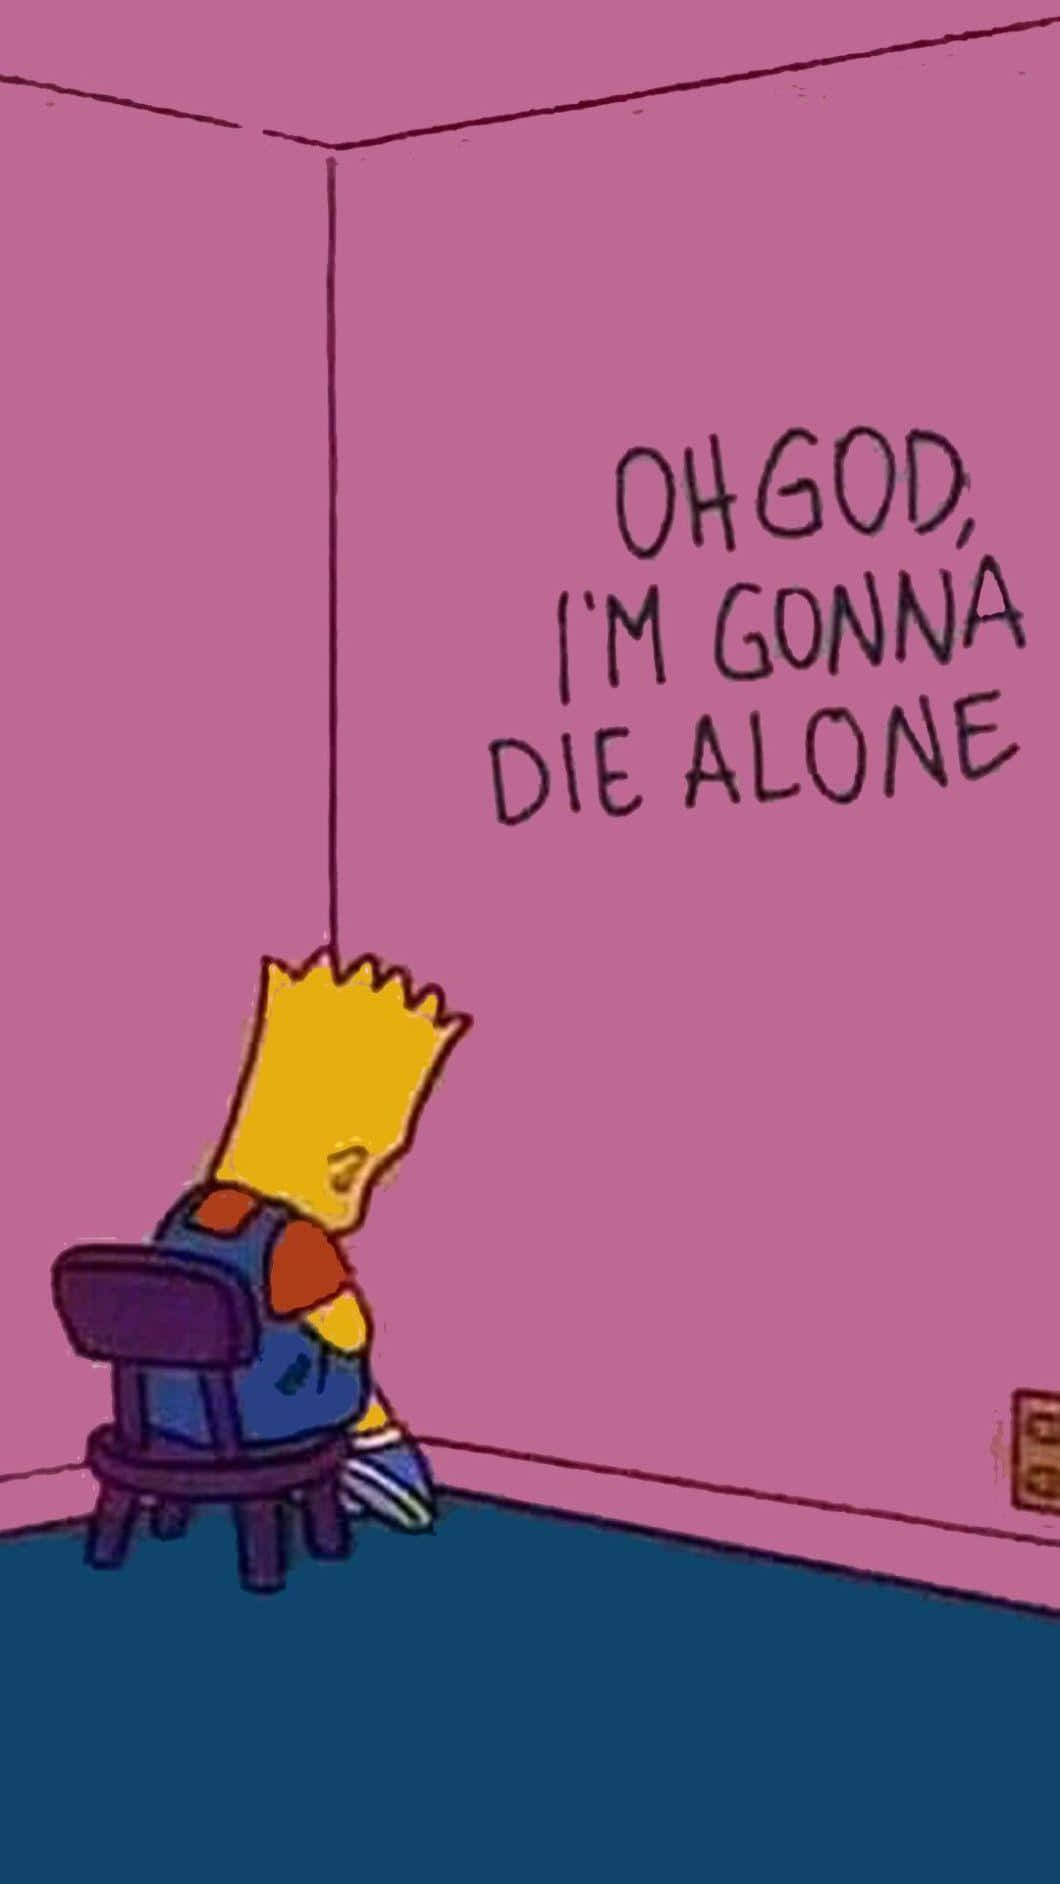 Sad Bart Simpson Phone Depressing Quote Wallpaper